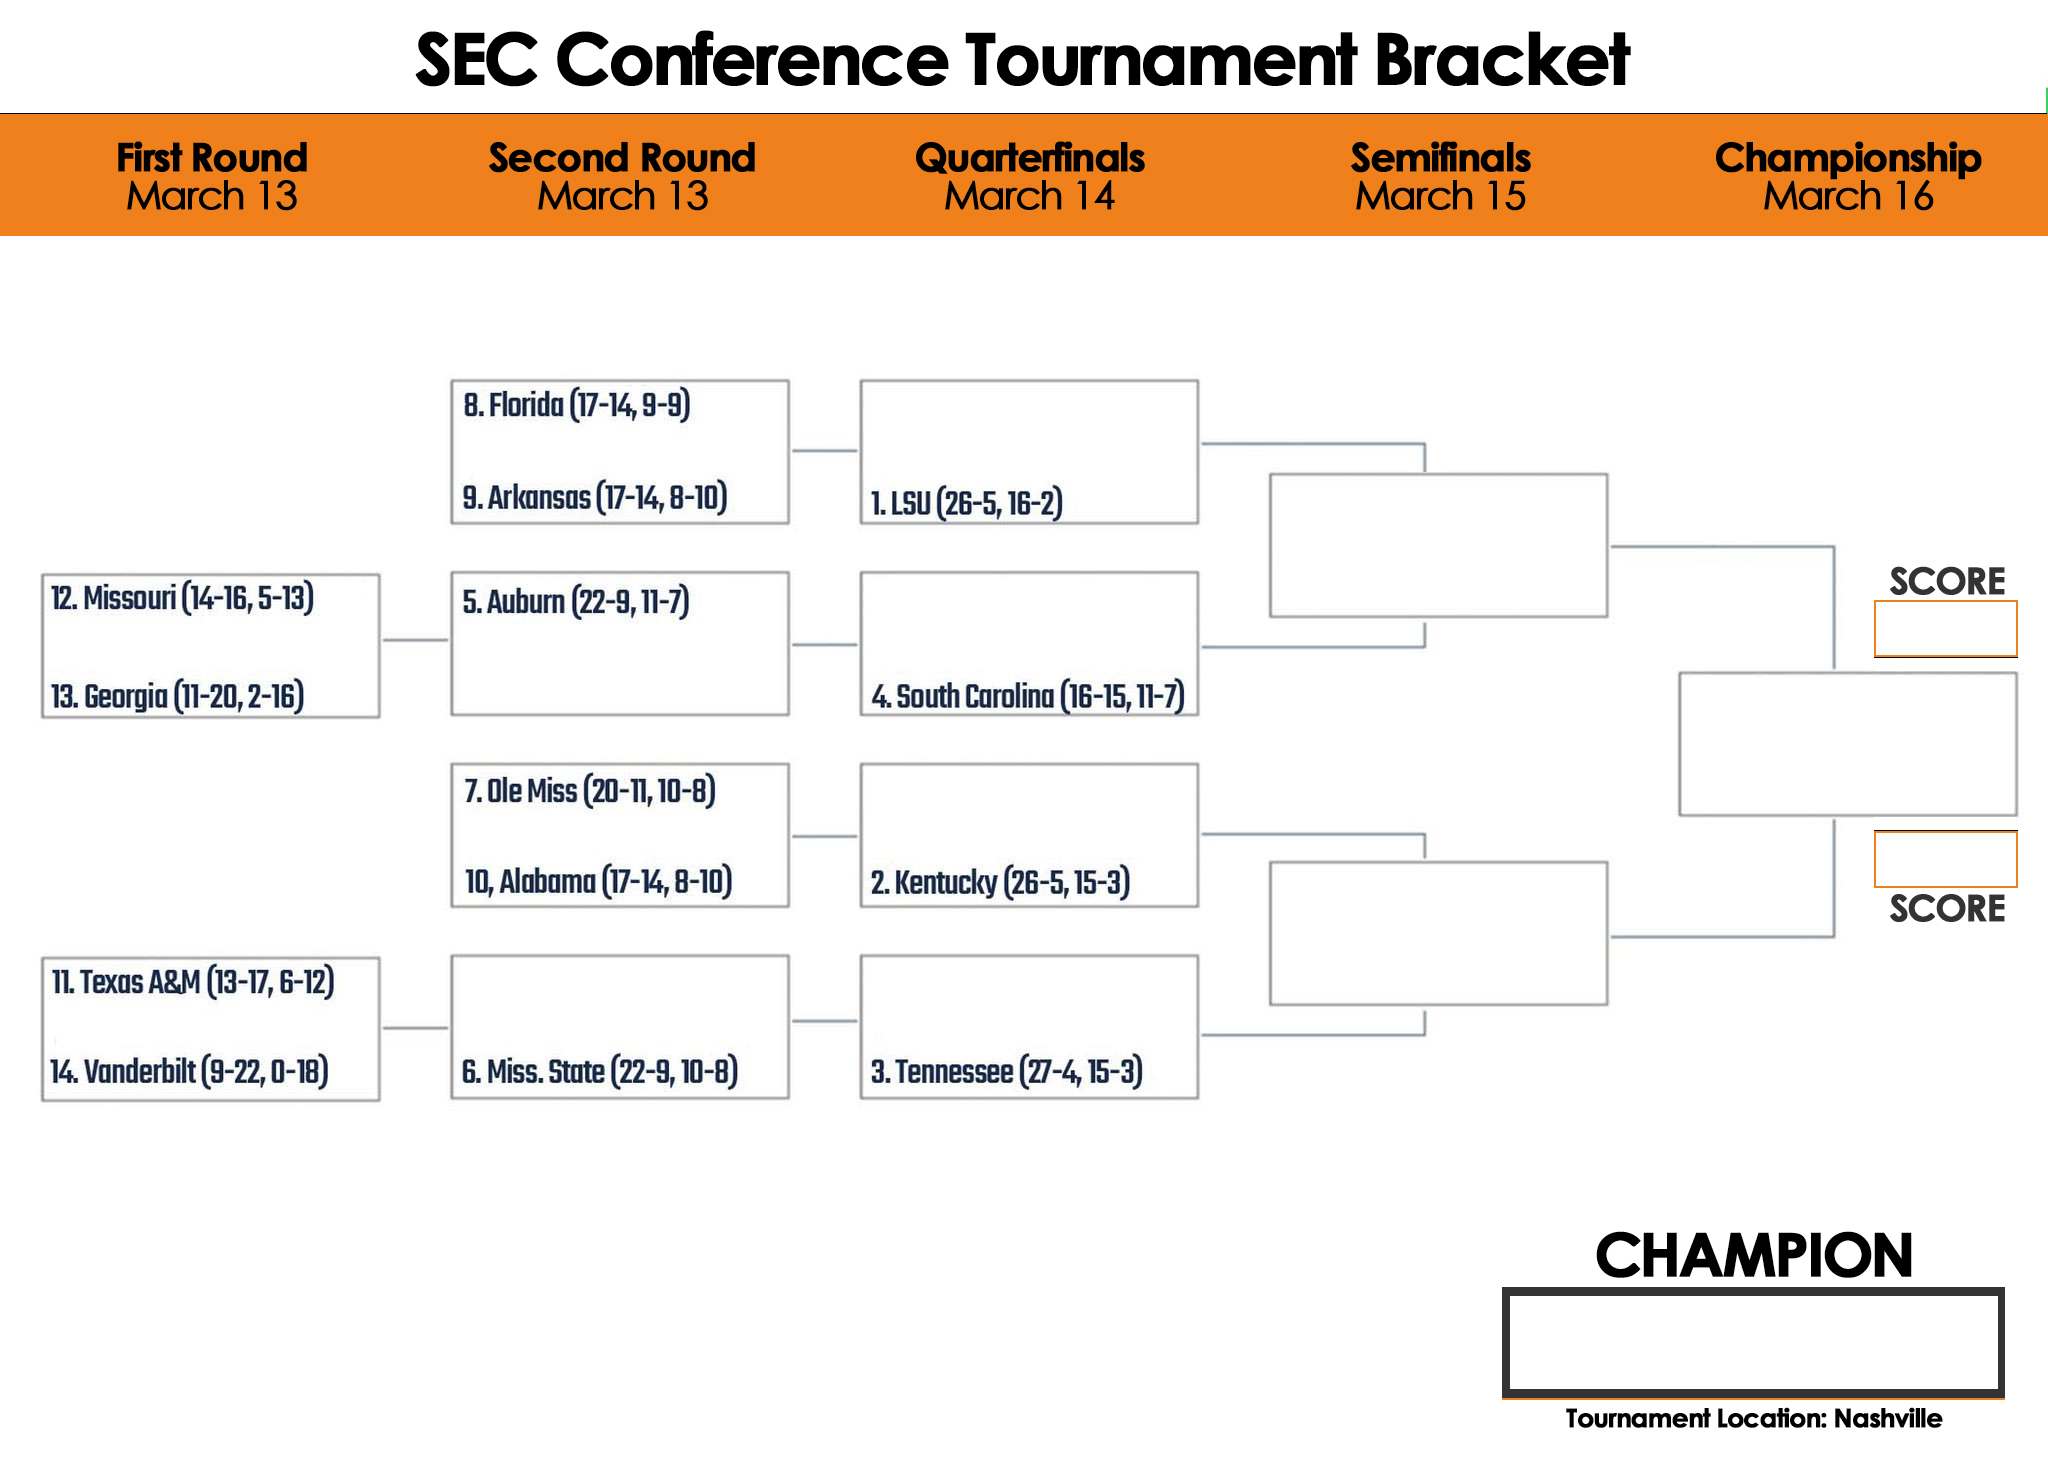 2019 SEC Conference Championship Bracket